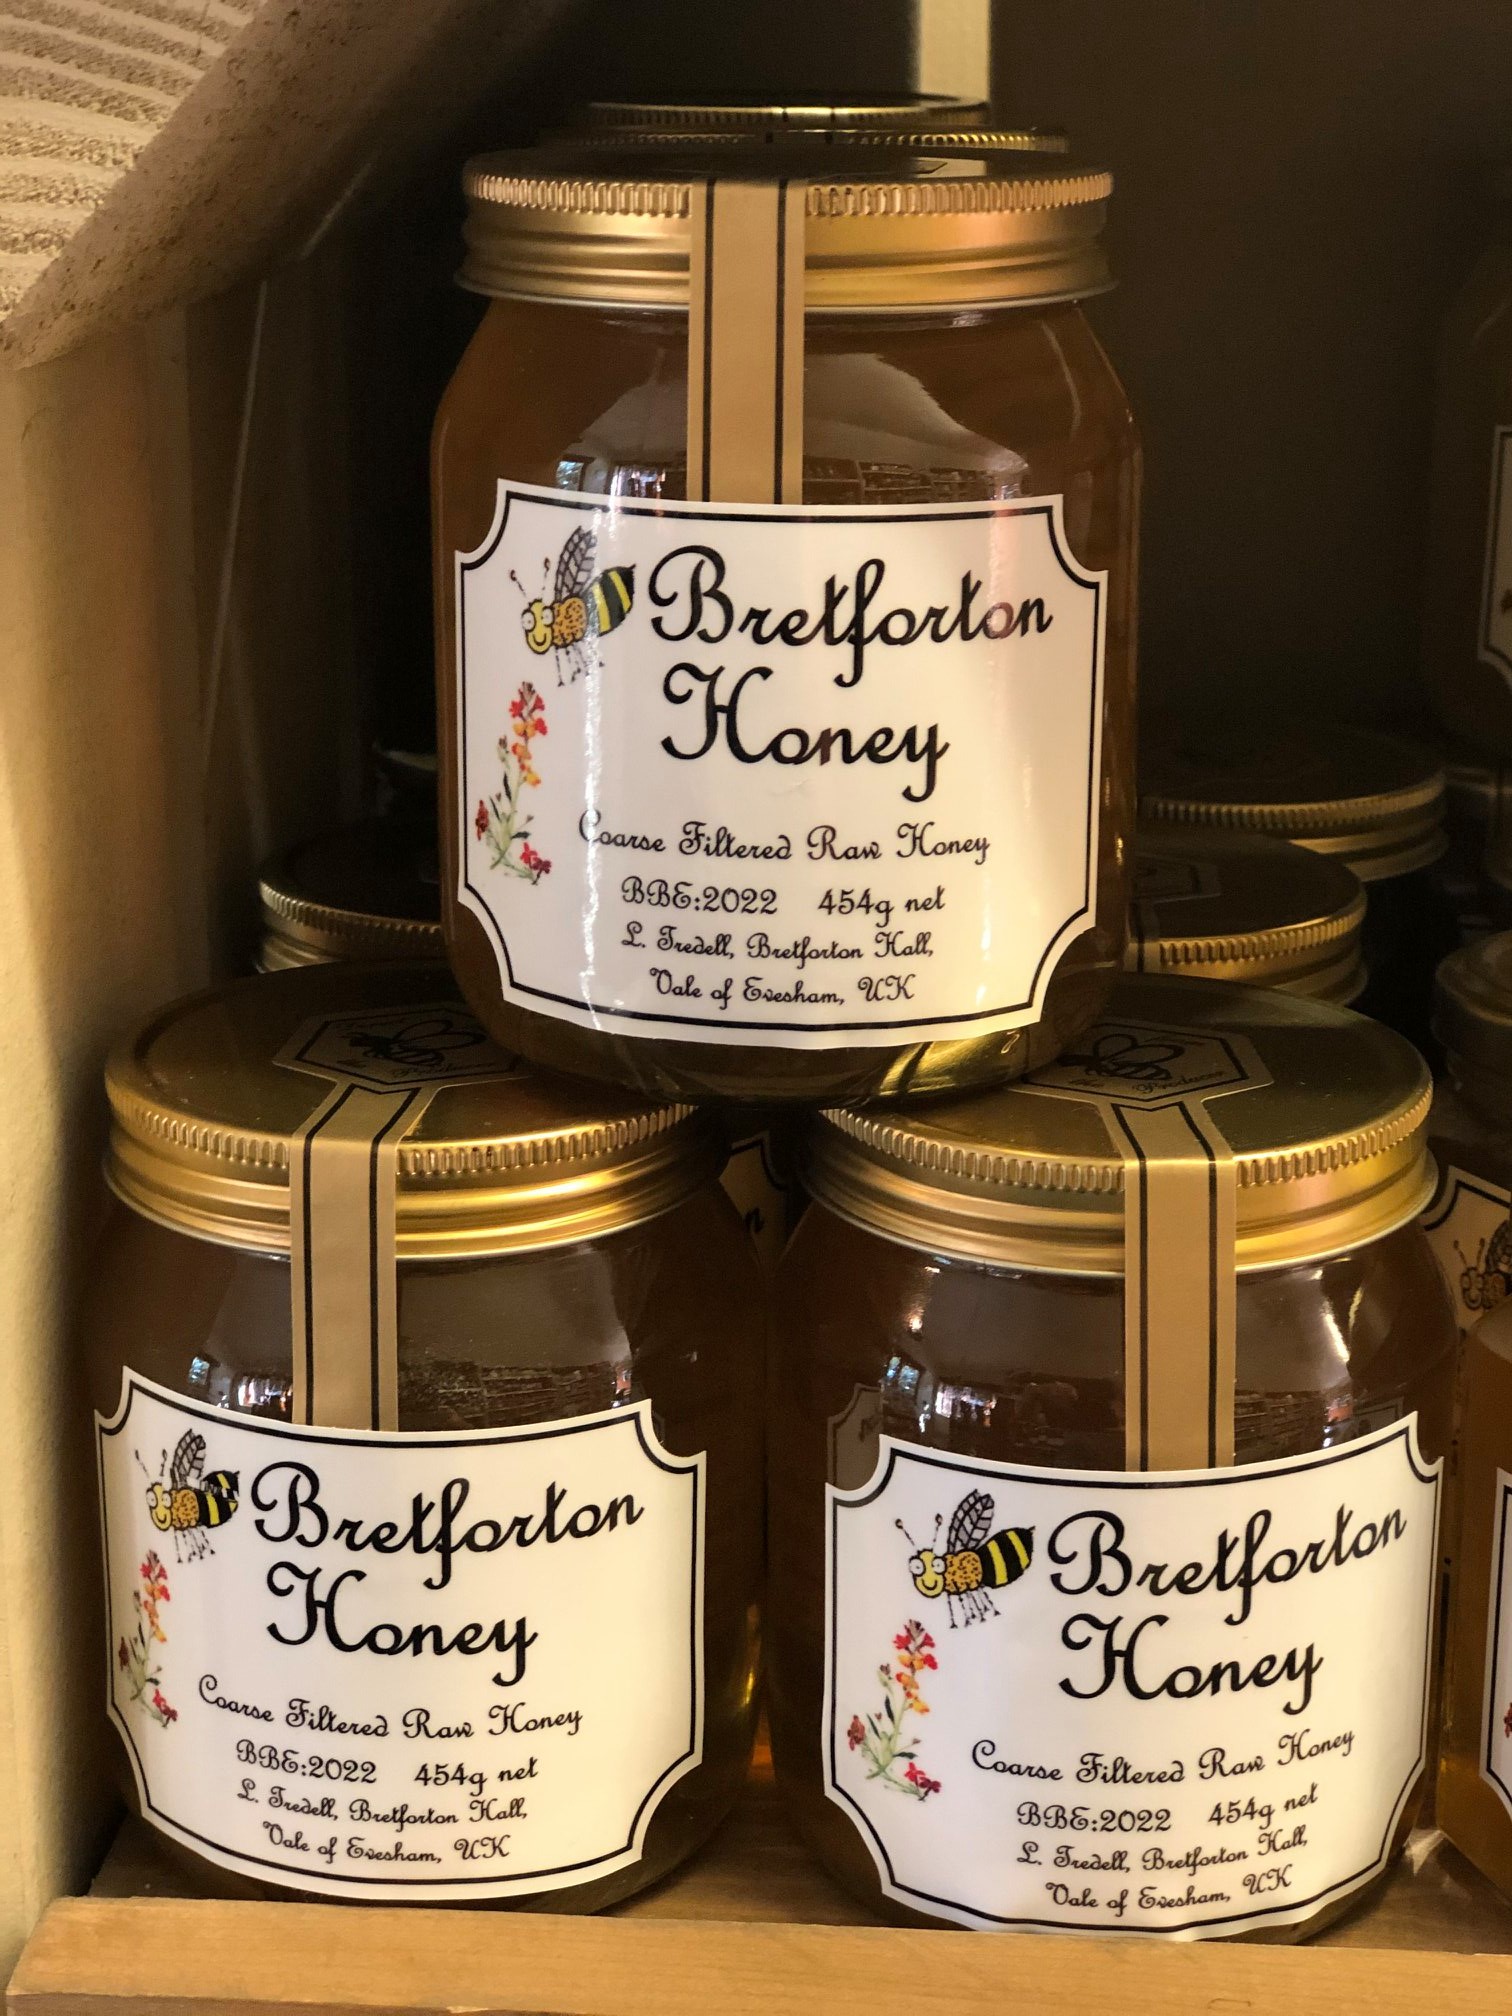 A photo of three jars of Bretforton honey